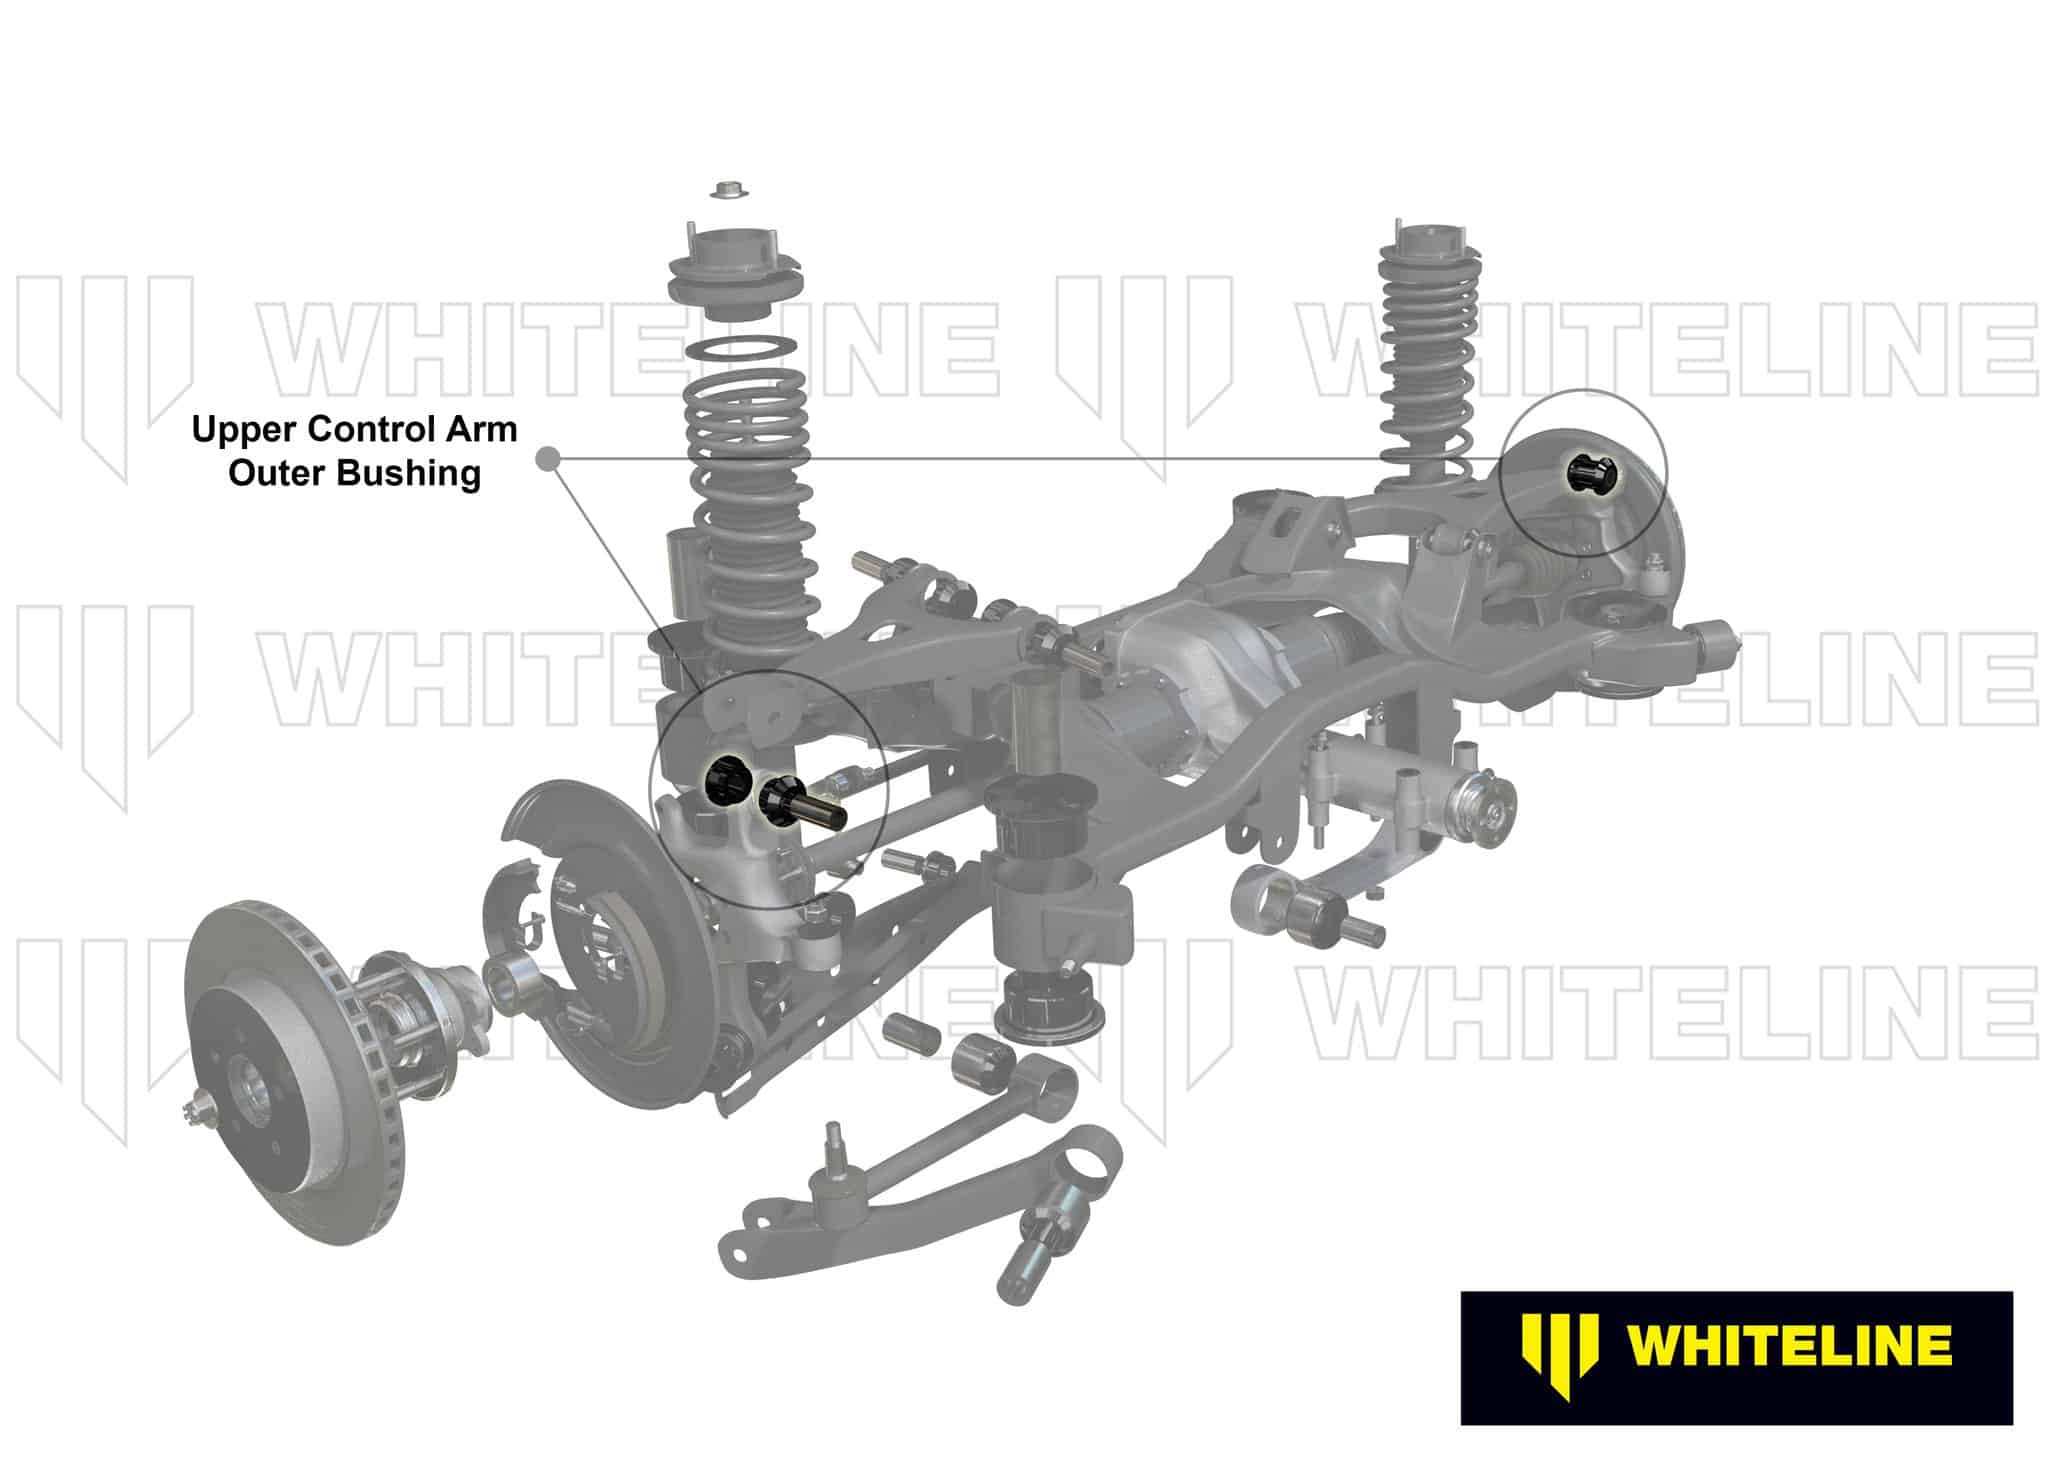 Whiteline - Rear Control Arm - Upper Outer Bushing Adjustable +/- 1.25 Degrees - 00-09 Subaru Legacy / Outback WLKCA399 Default Title on Bleeding Tarmac 